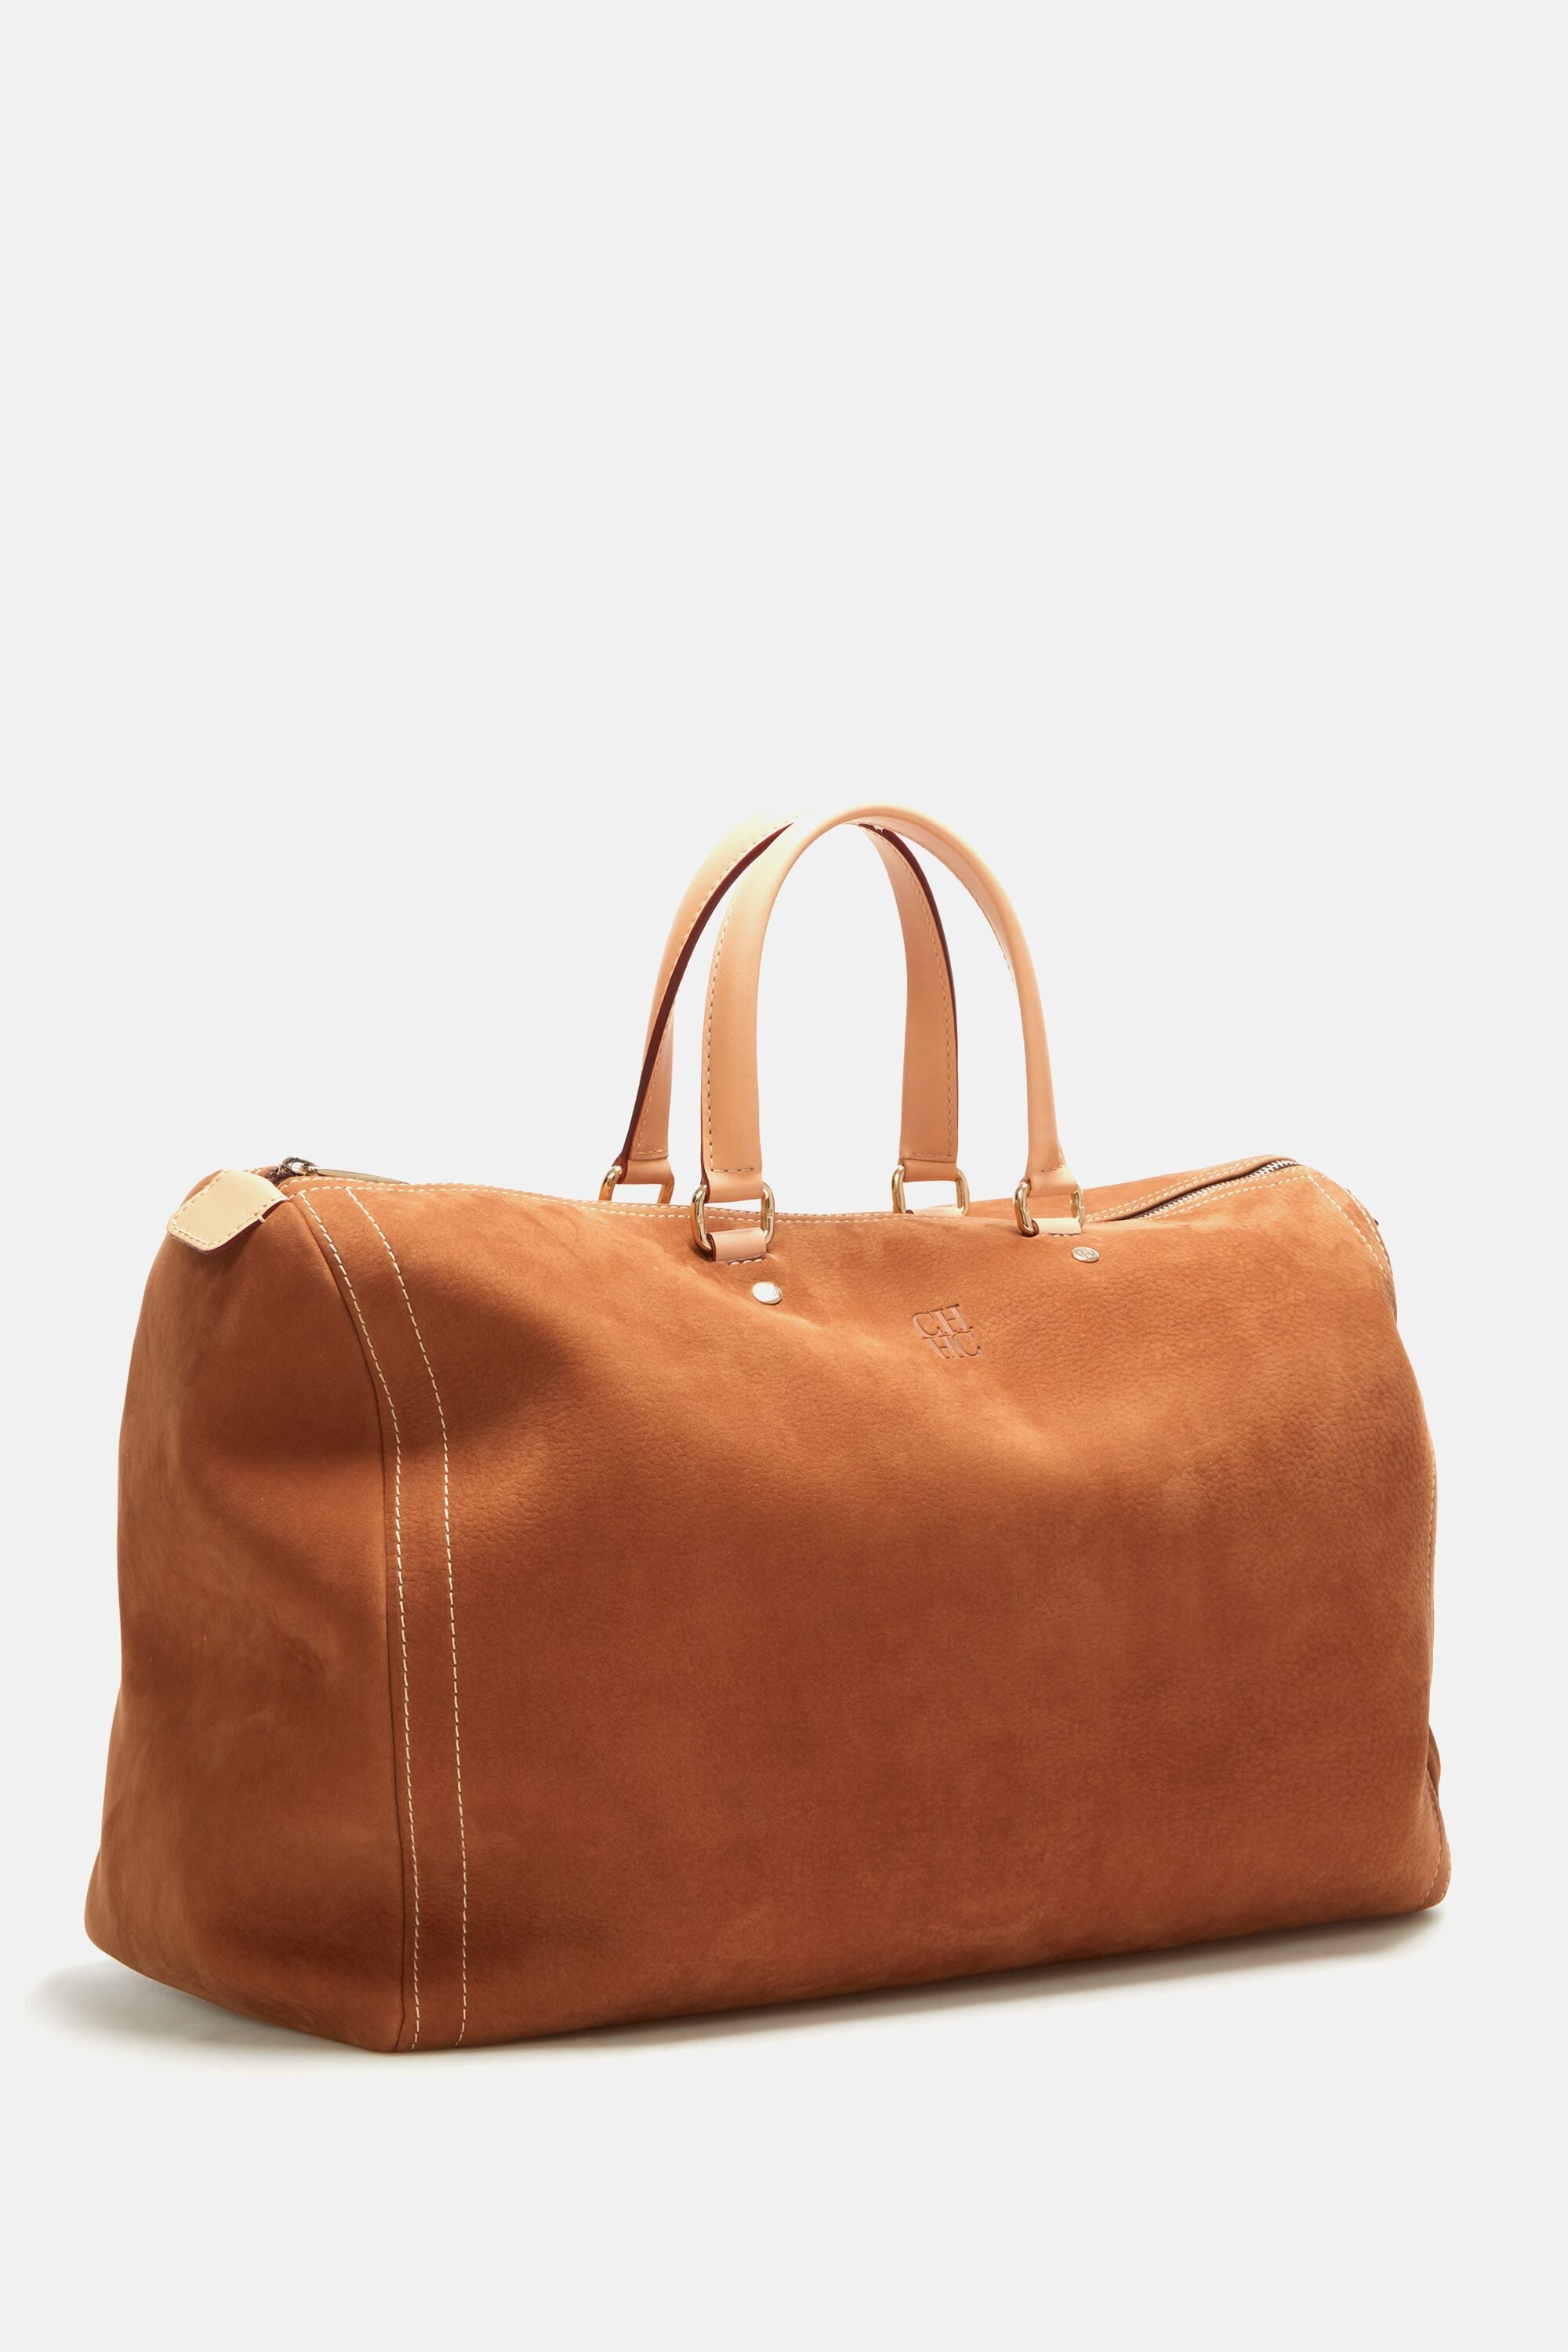 13 | Large handbag caramel - Carolina Herrera France